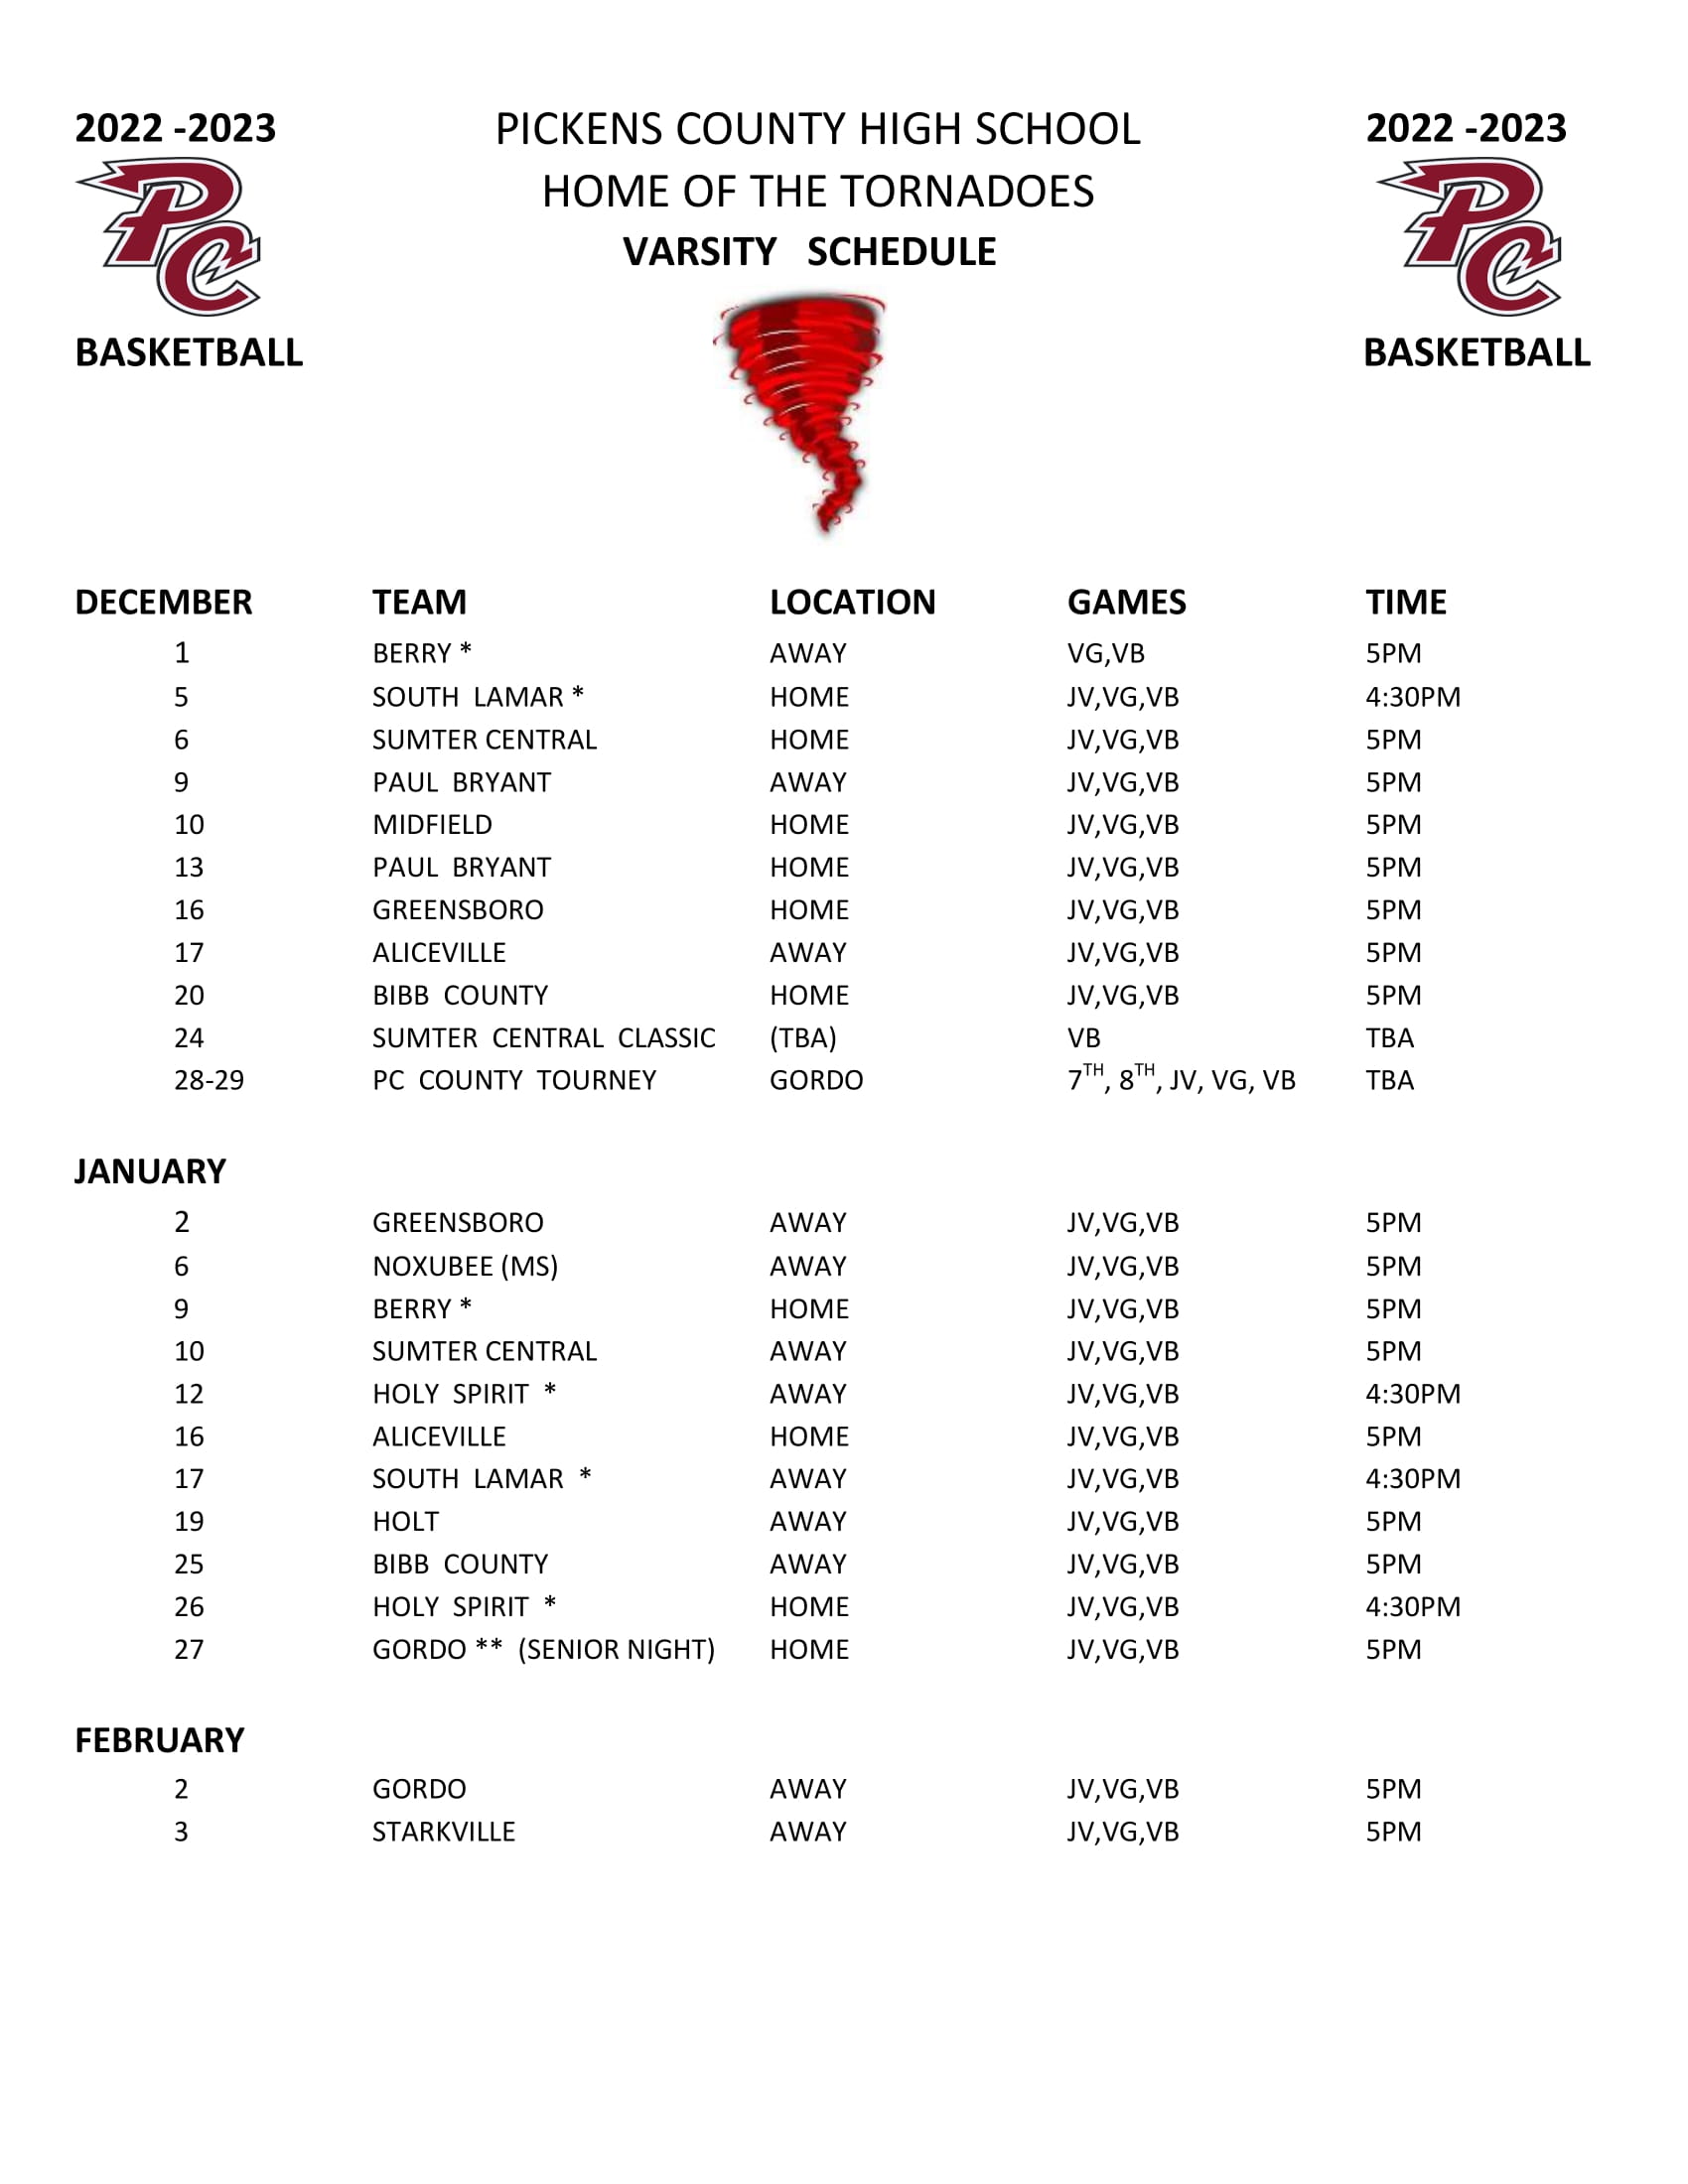 2022-2023 Varsity Basketball Schedule